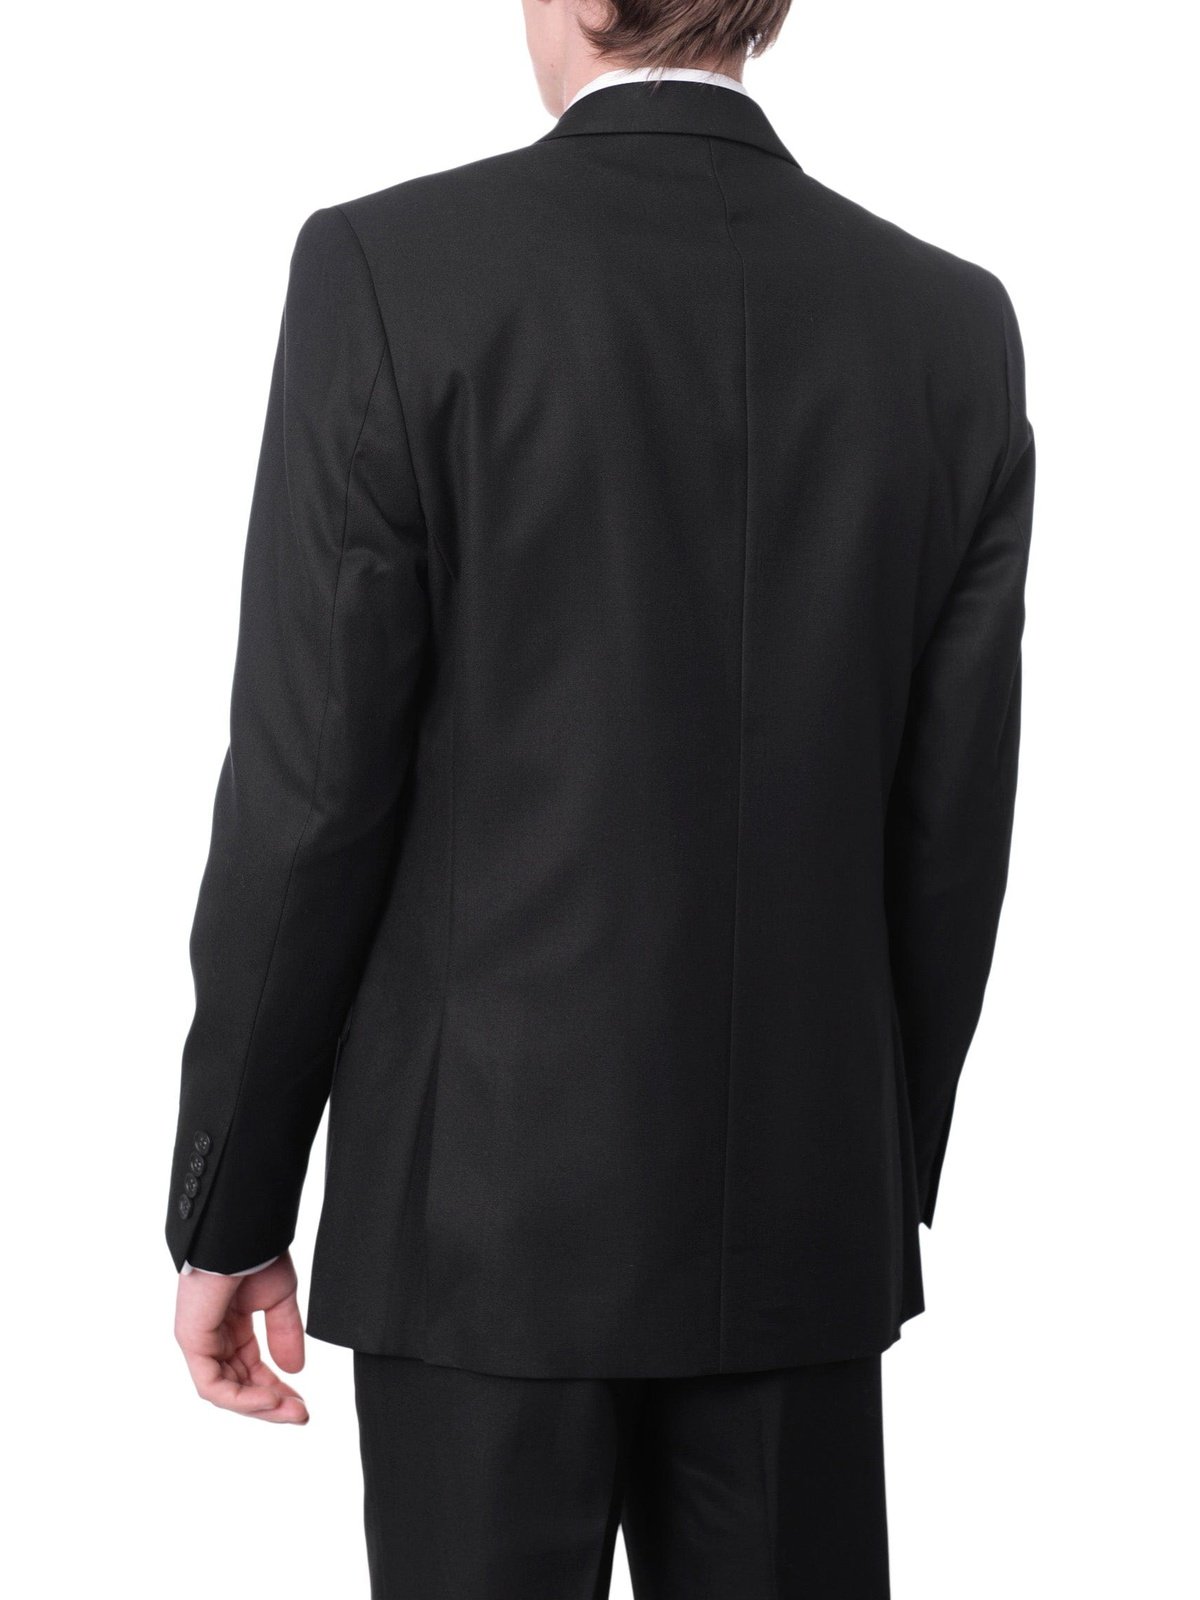 Raphael BLAZERS Raphael Slim Fit Solid Black Two Button Blazer Sportcoat